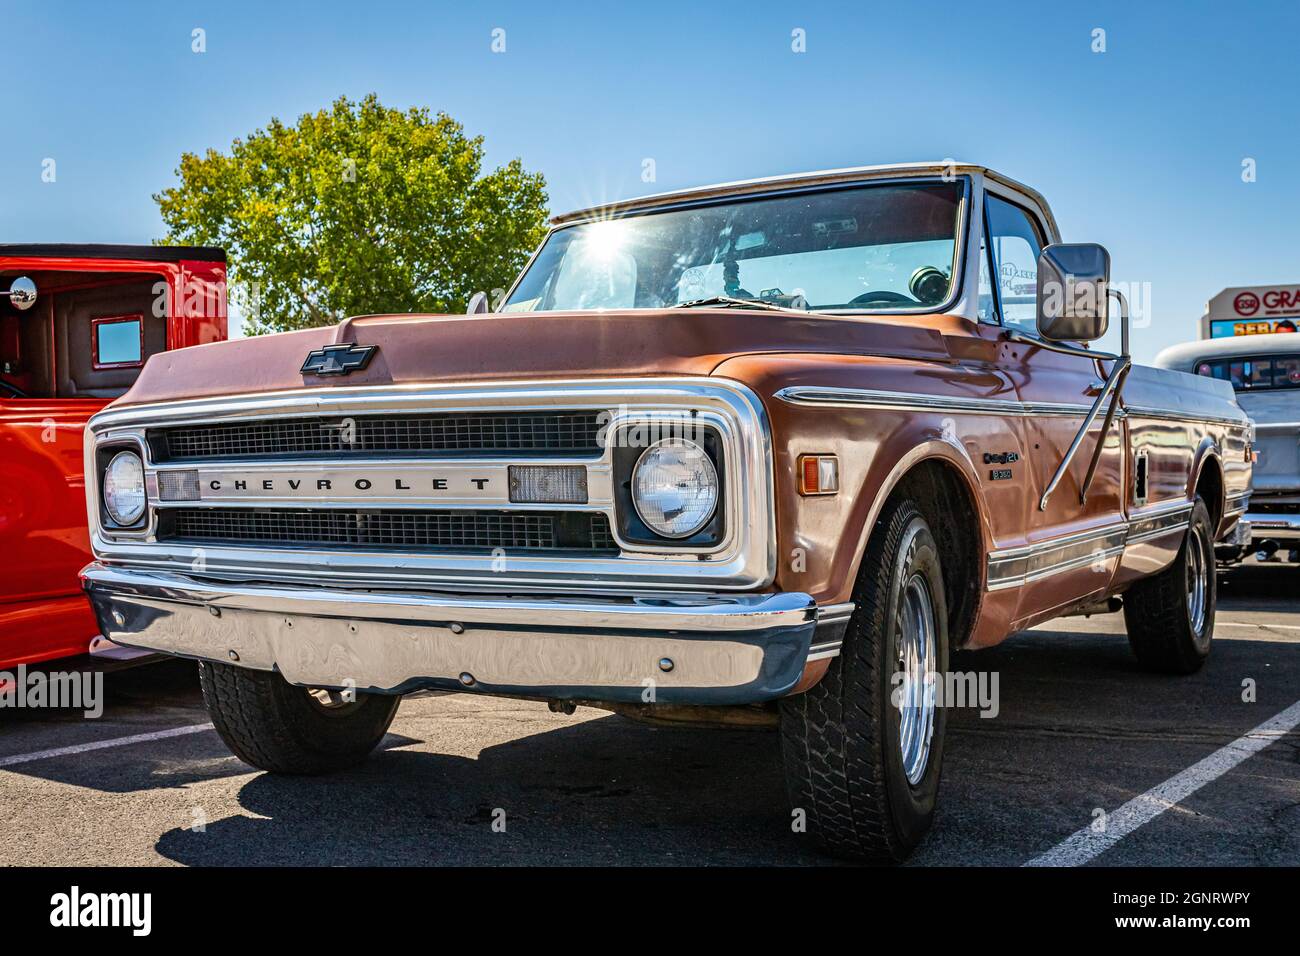 Custom pickup truck -Fotos und -Bildmaterial in hoher Auflösung – Alamy